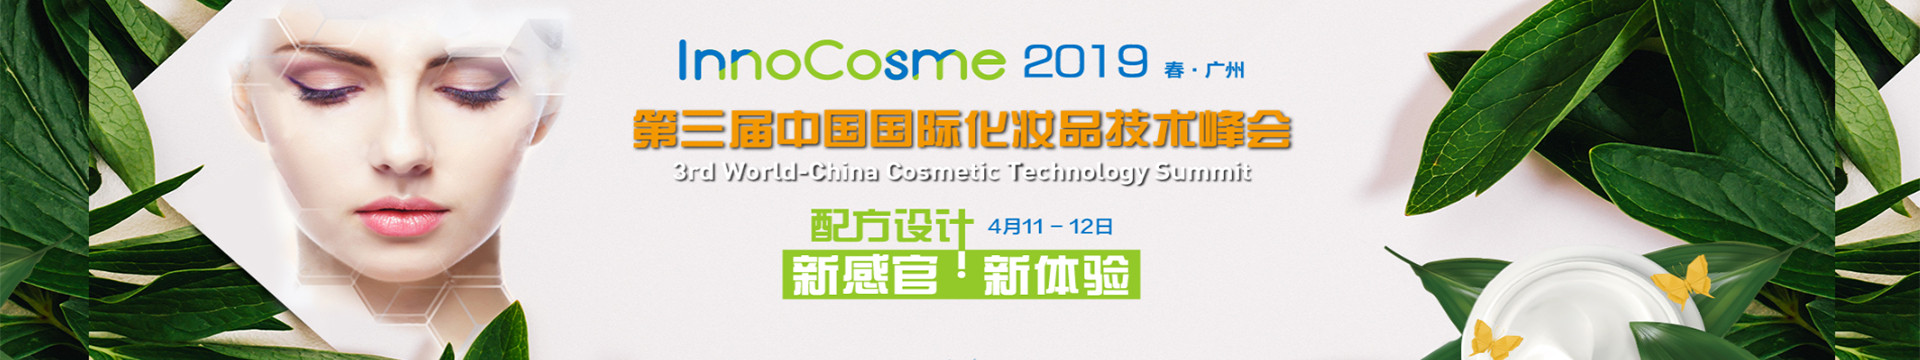 InnoCosme 2019第三届中国国际化妆品技术峰会